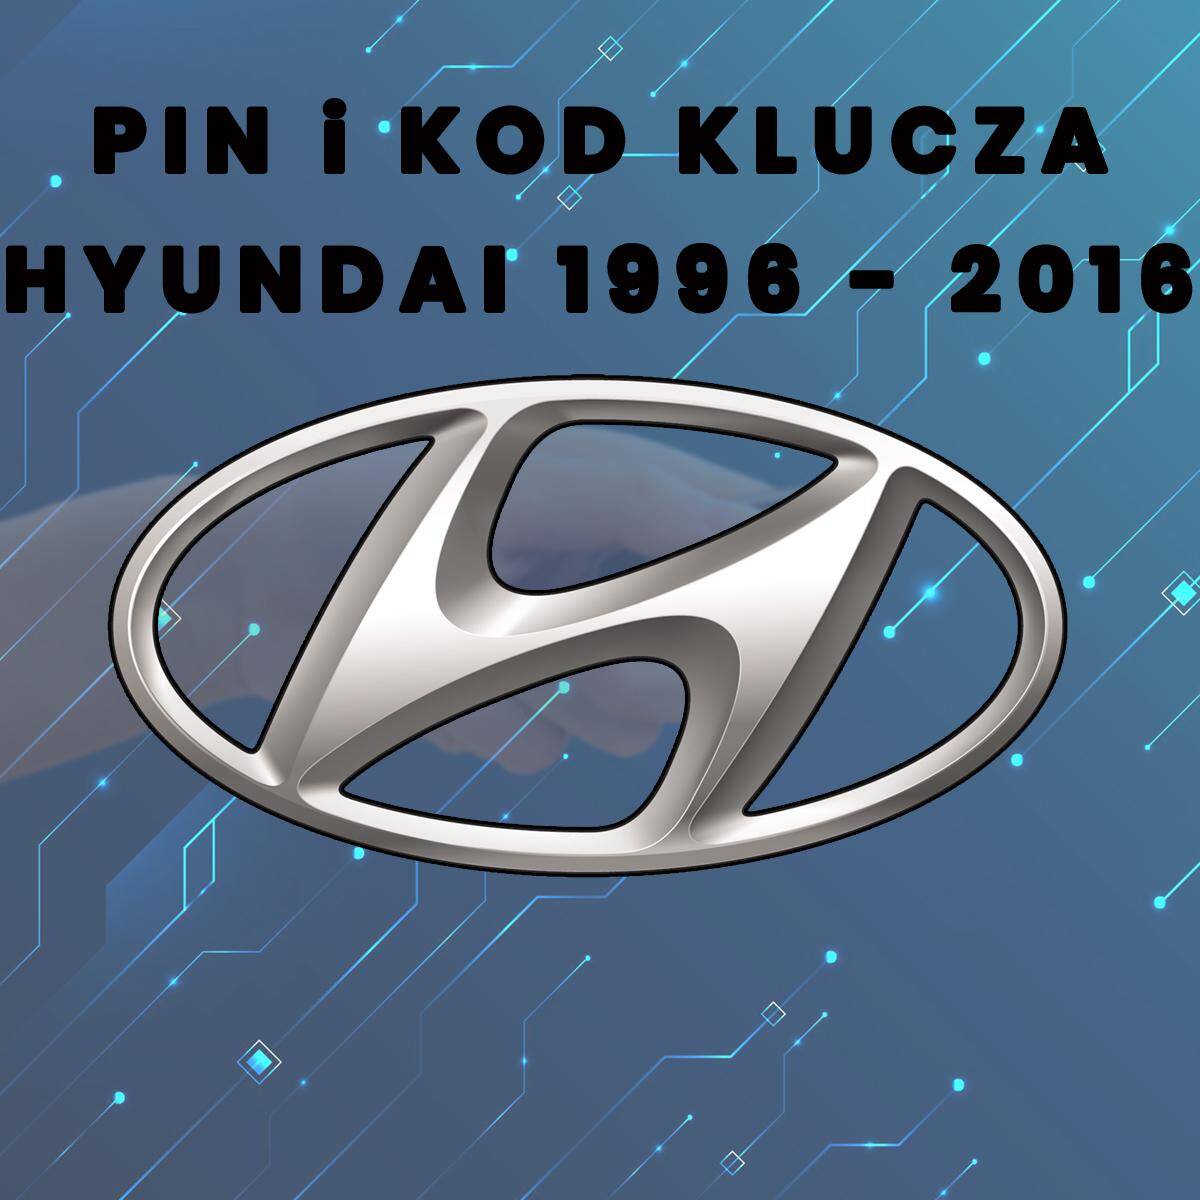 Pin i kod klucza Hyundai rocznik 1996 - 2016